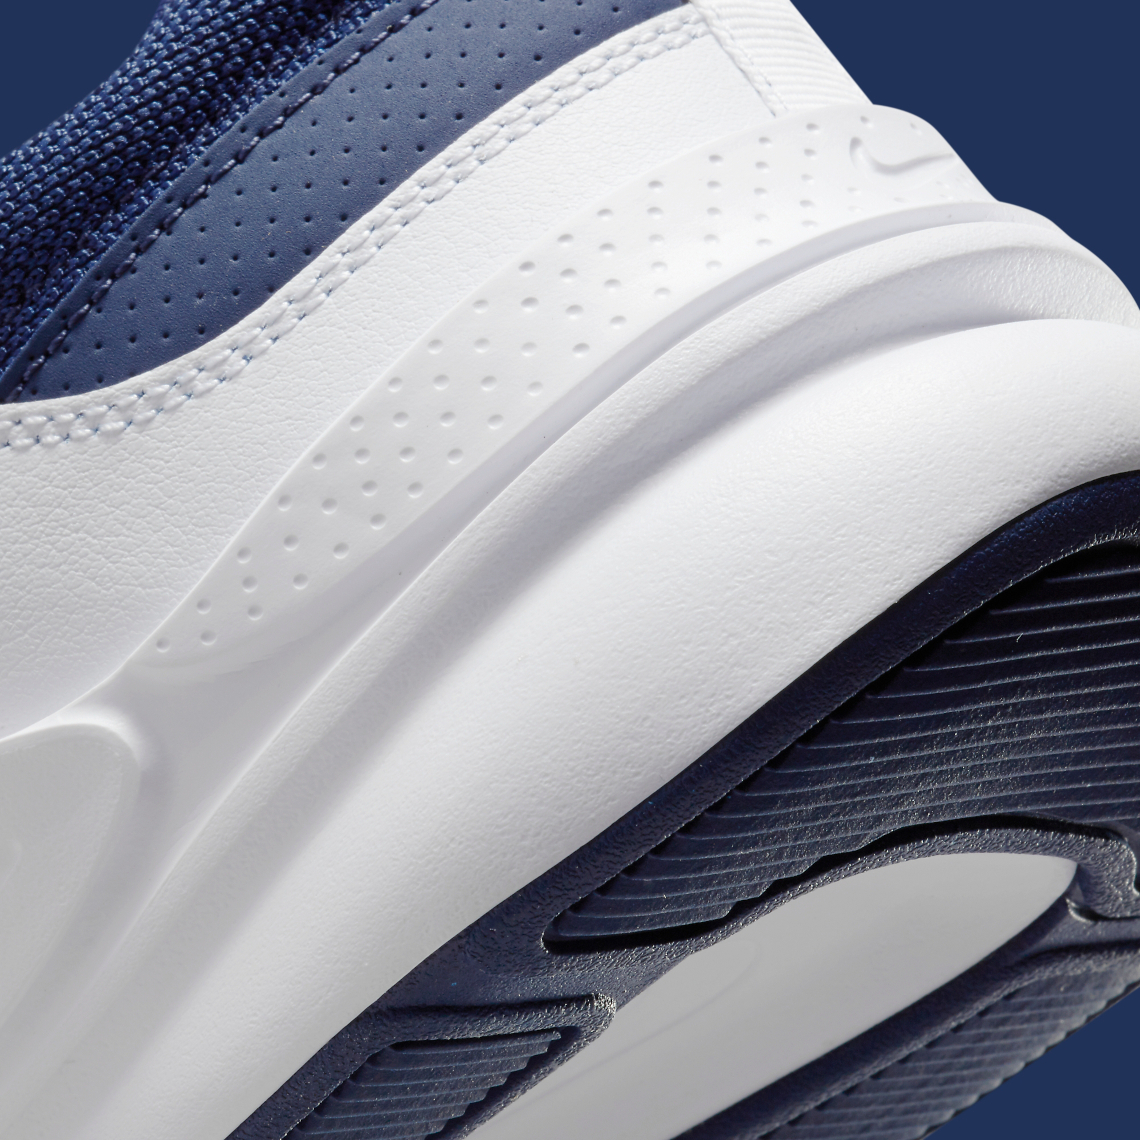 Nike Air Monarch IV White DJ1196-100 Release Date | SneakerNews.com